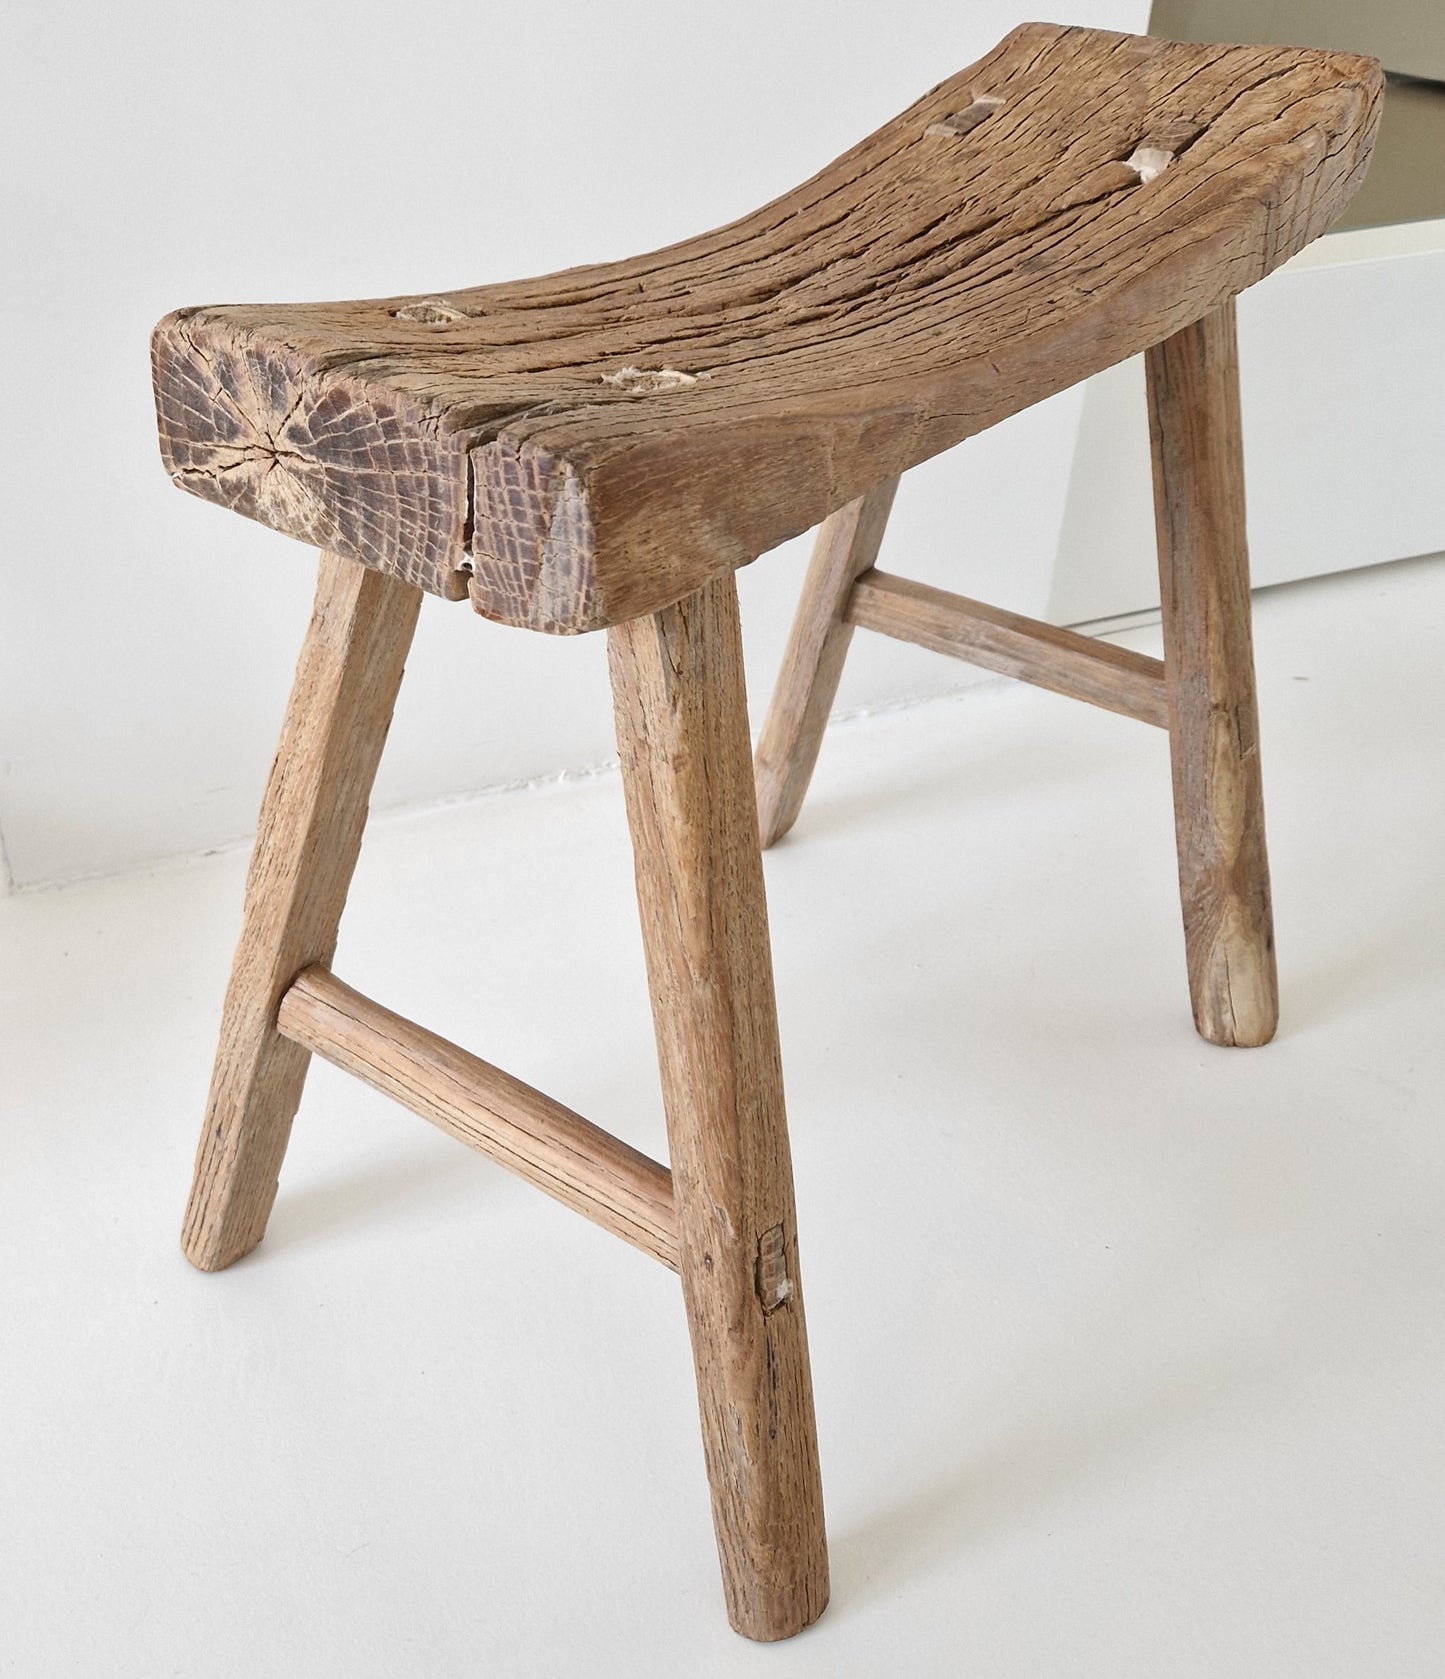 Old wooden saddle stool